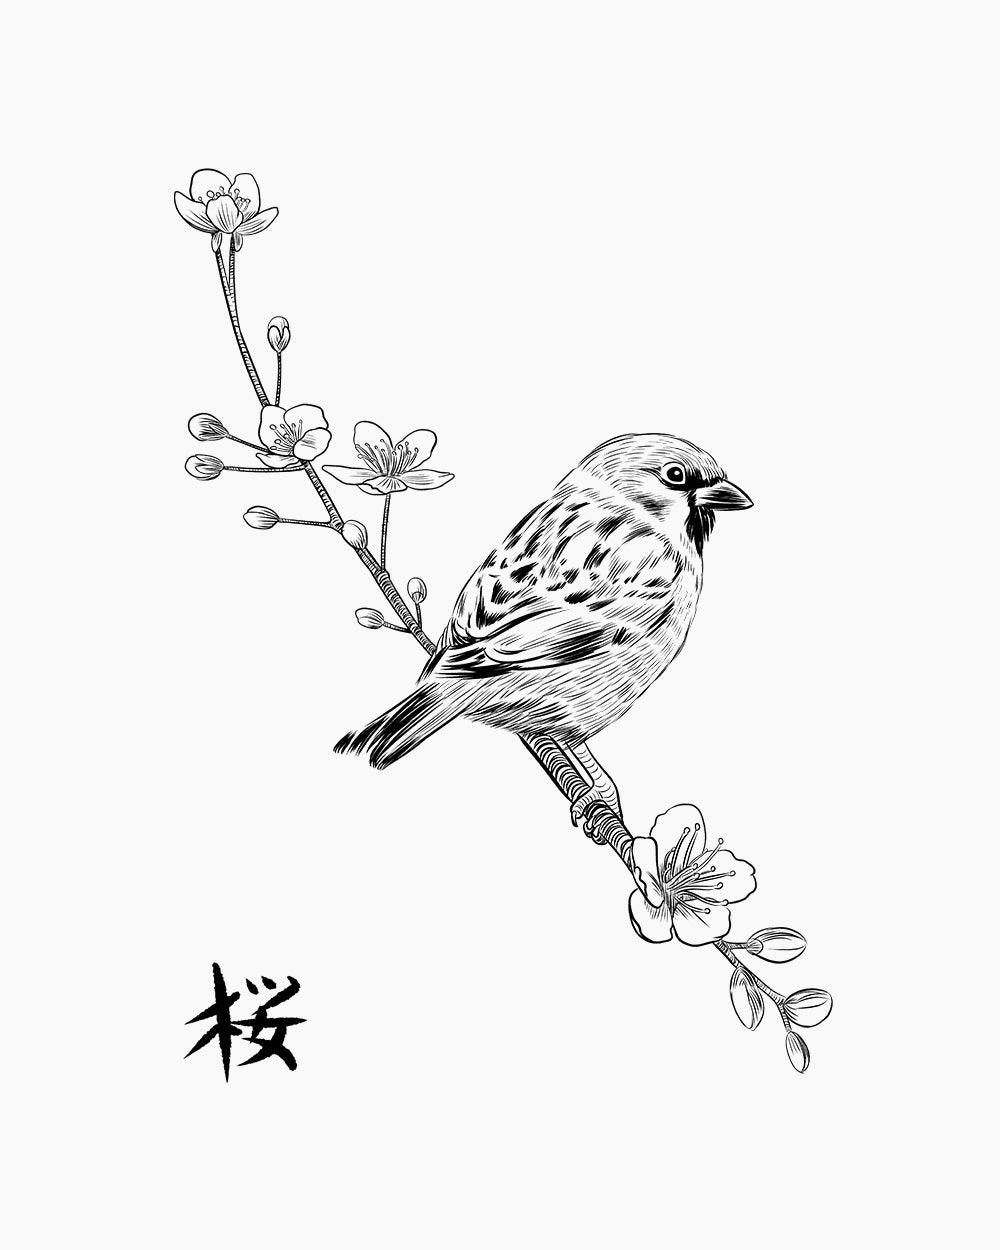 Sparrow on Cherry Long Sleeve Australia Online #colour_white